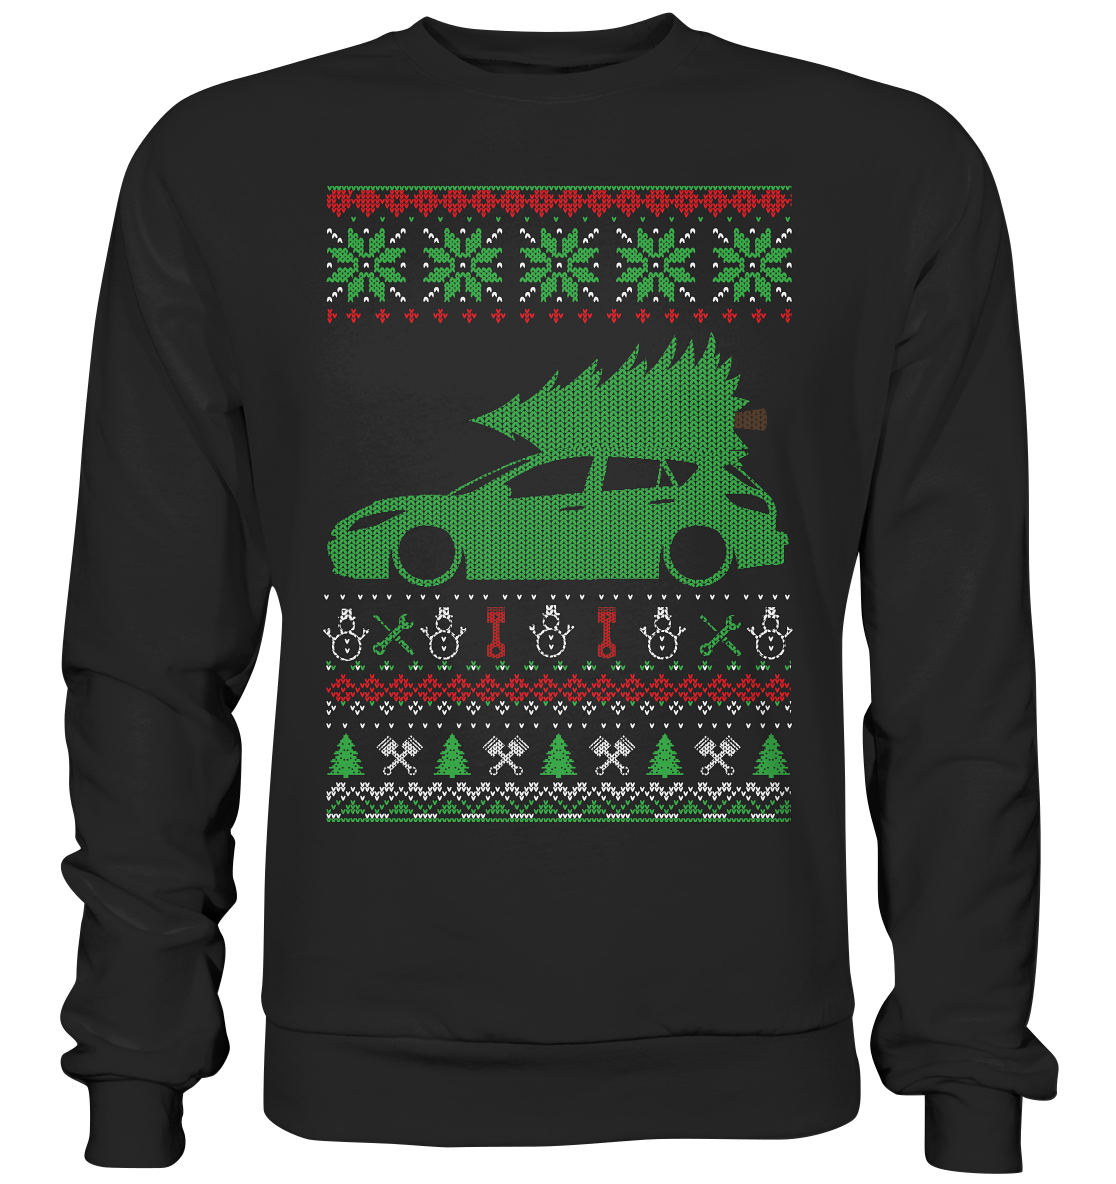 CODUGLY_MGK3BL - Premium Sweatshirt